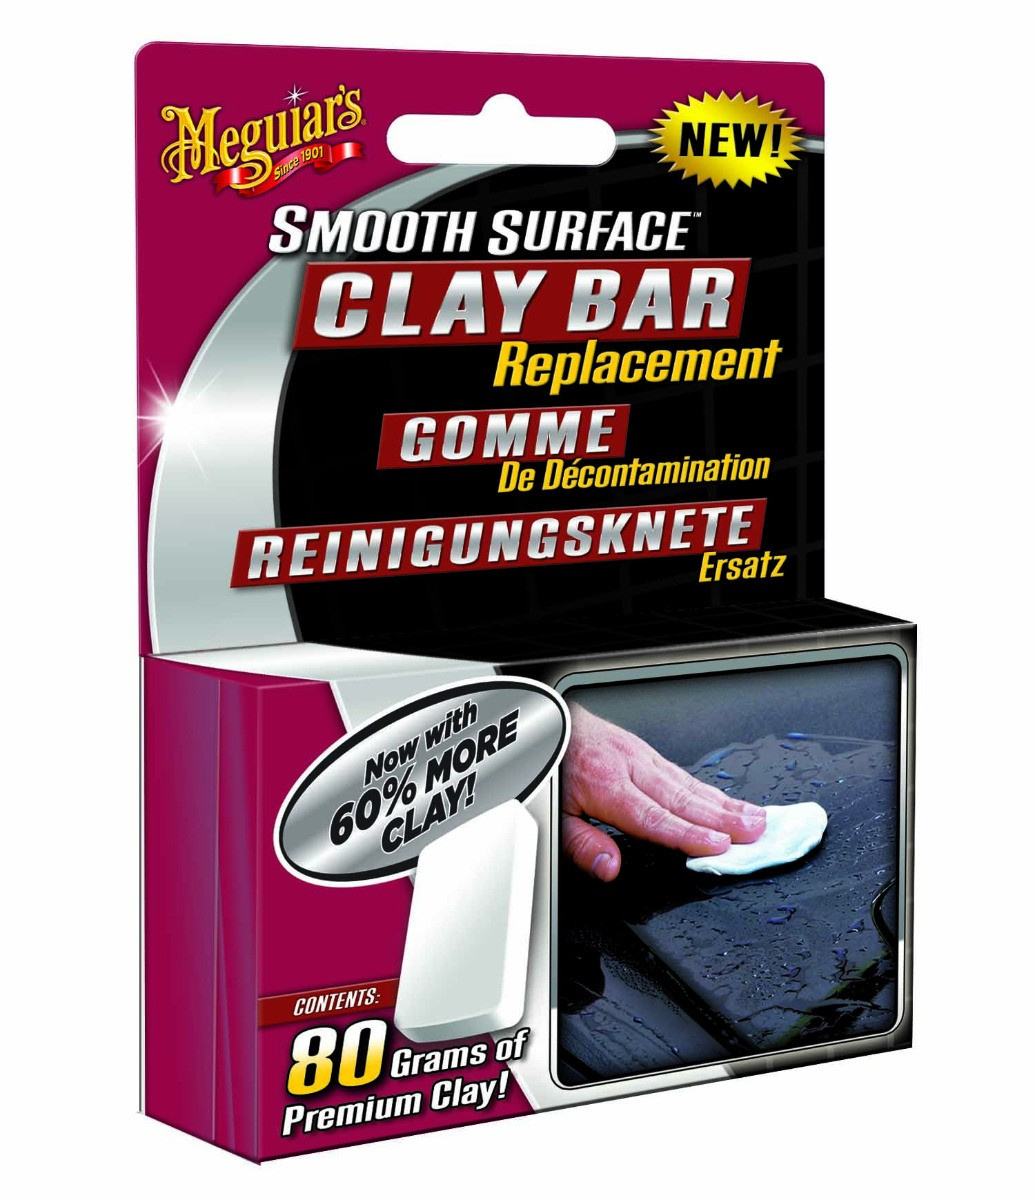 Meguiar's Smooth Surface Replacement Clay Bar - Reinigungsknete 80g